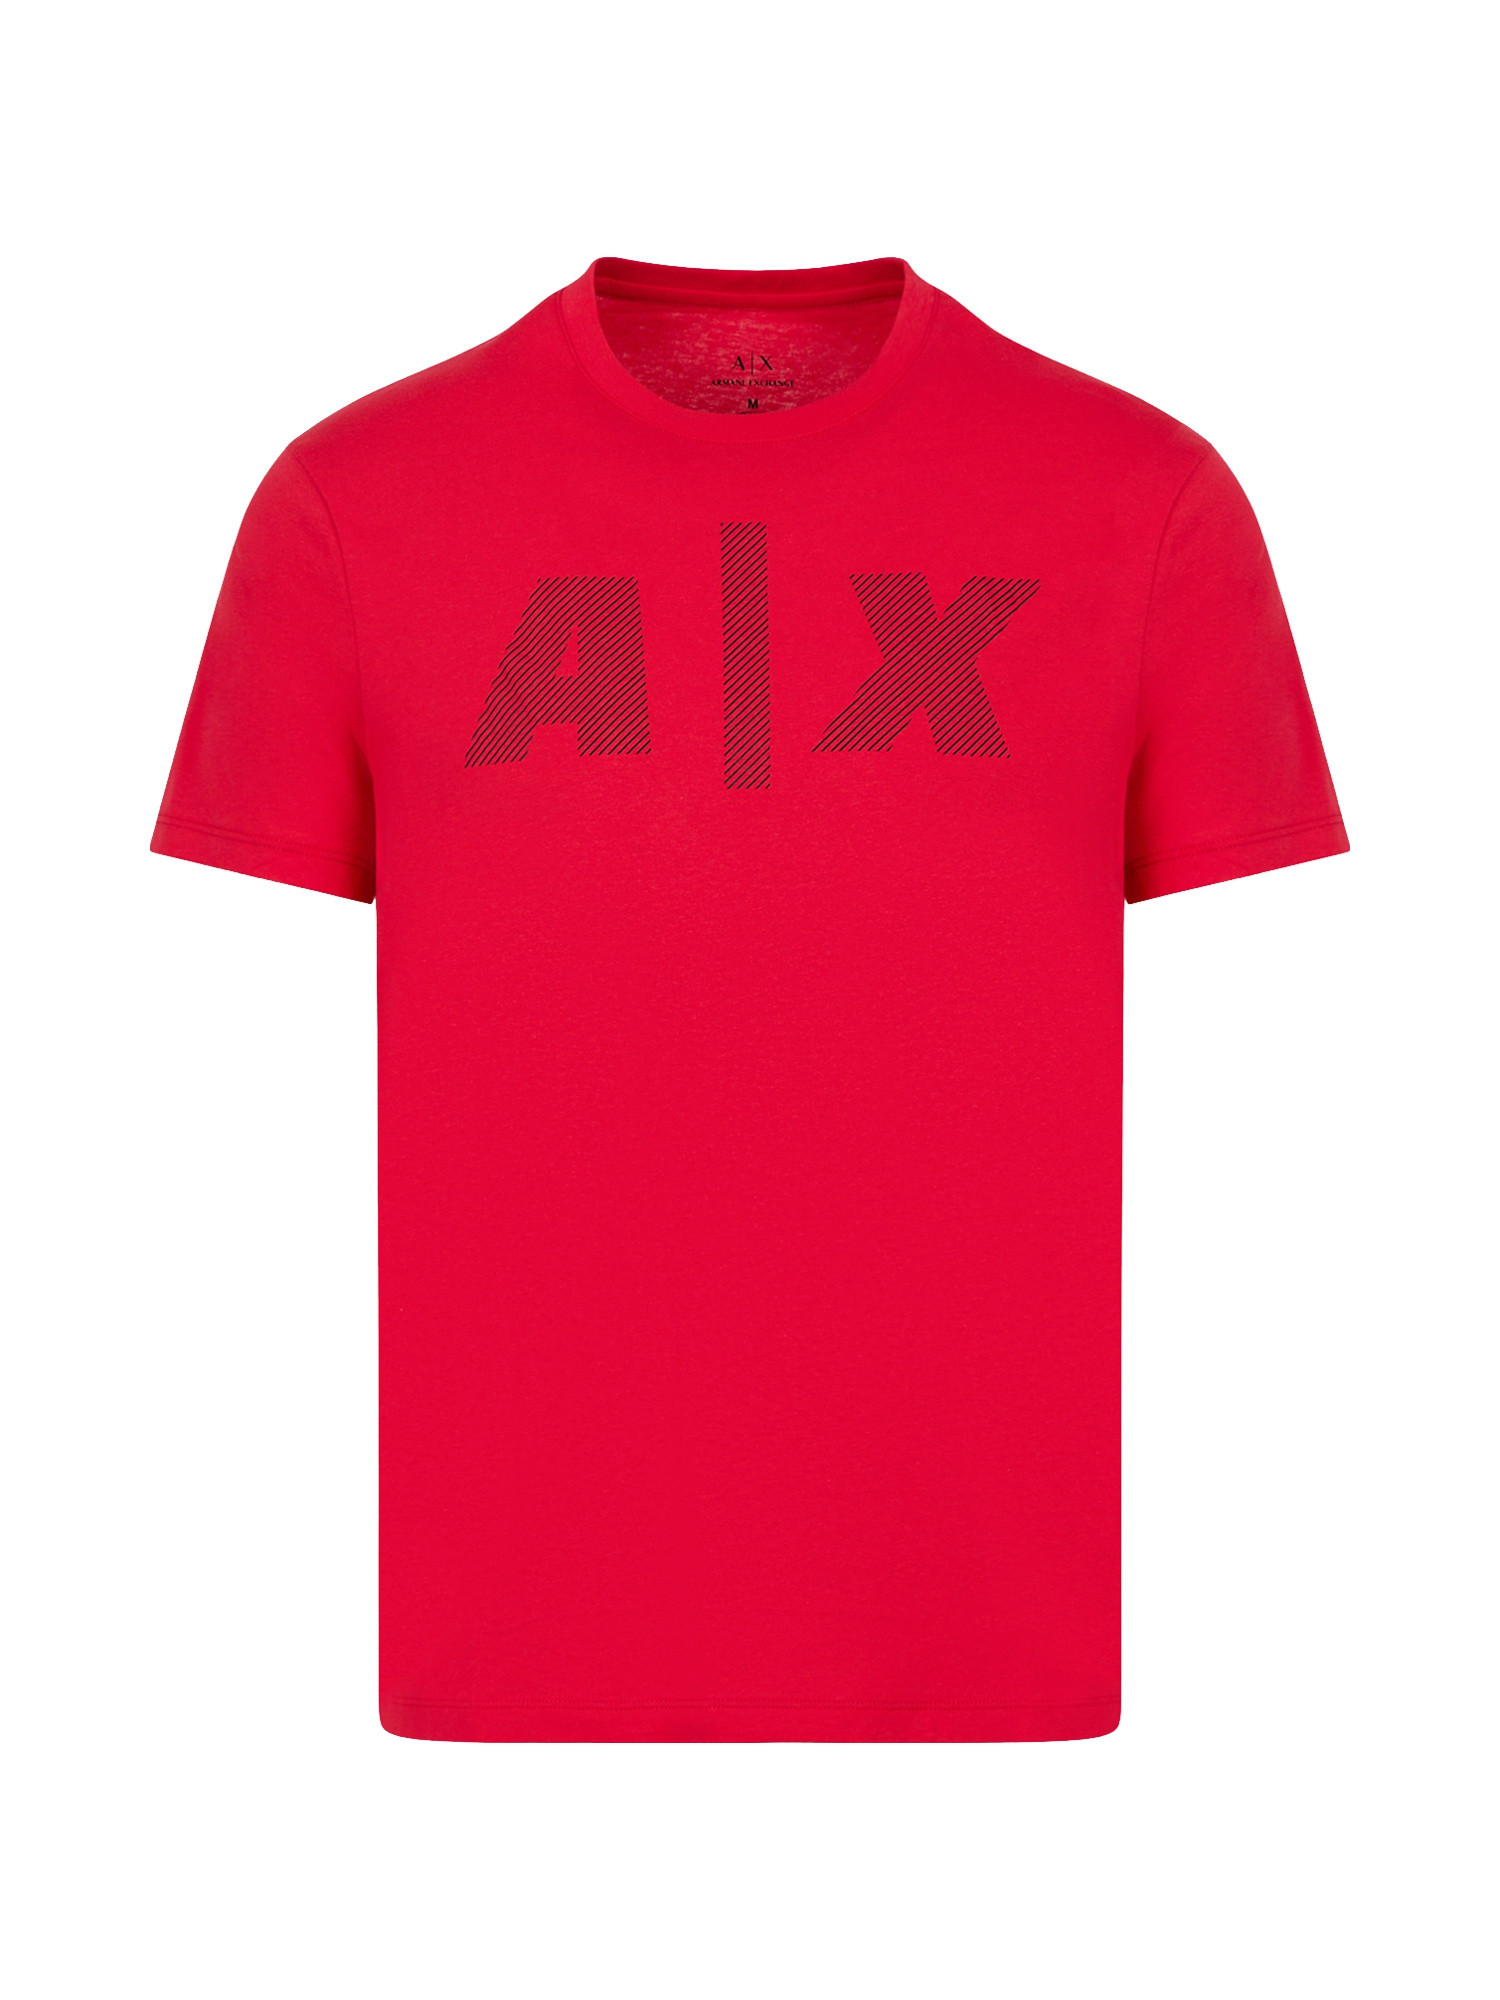 Armani Exchange - T-shirt con stampa logo regular fit, Rosso, large image number 0